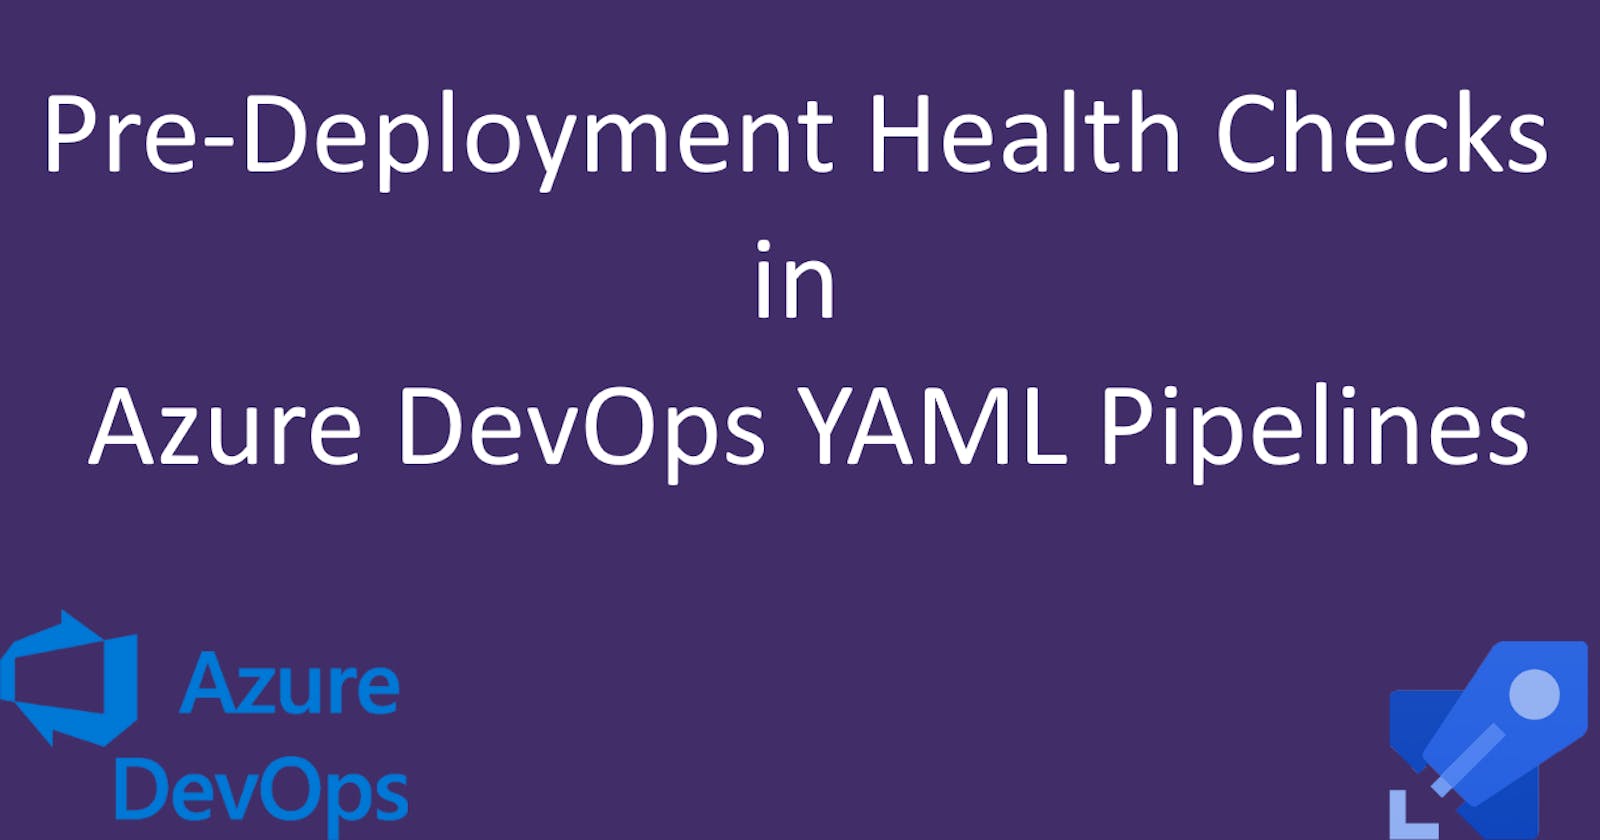 Pre-Deployment Health Checks in Azure DevOps YAML Pipelines